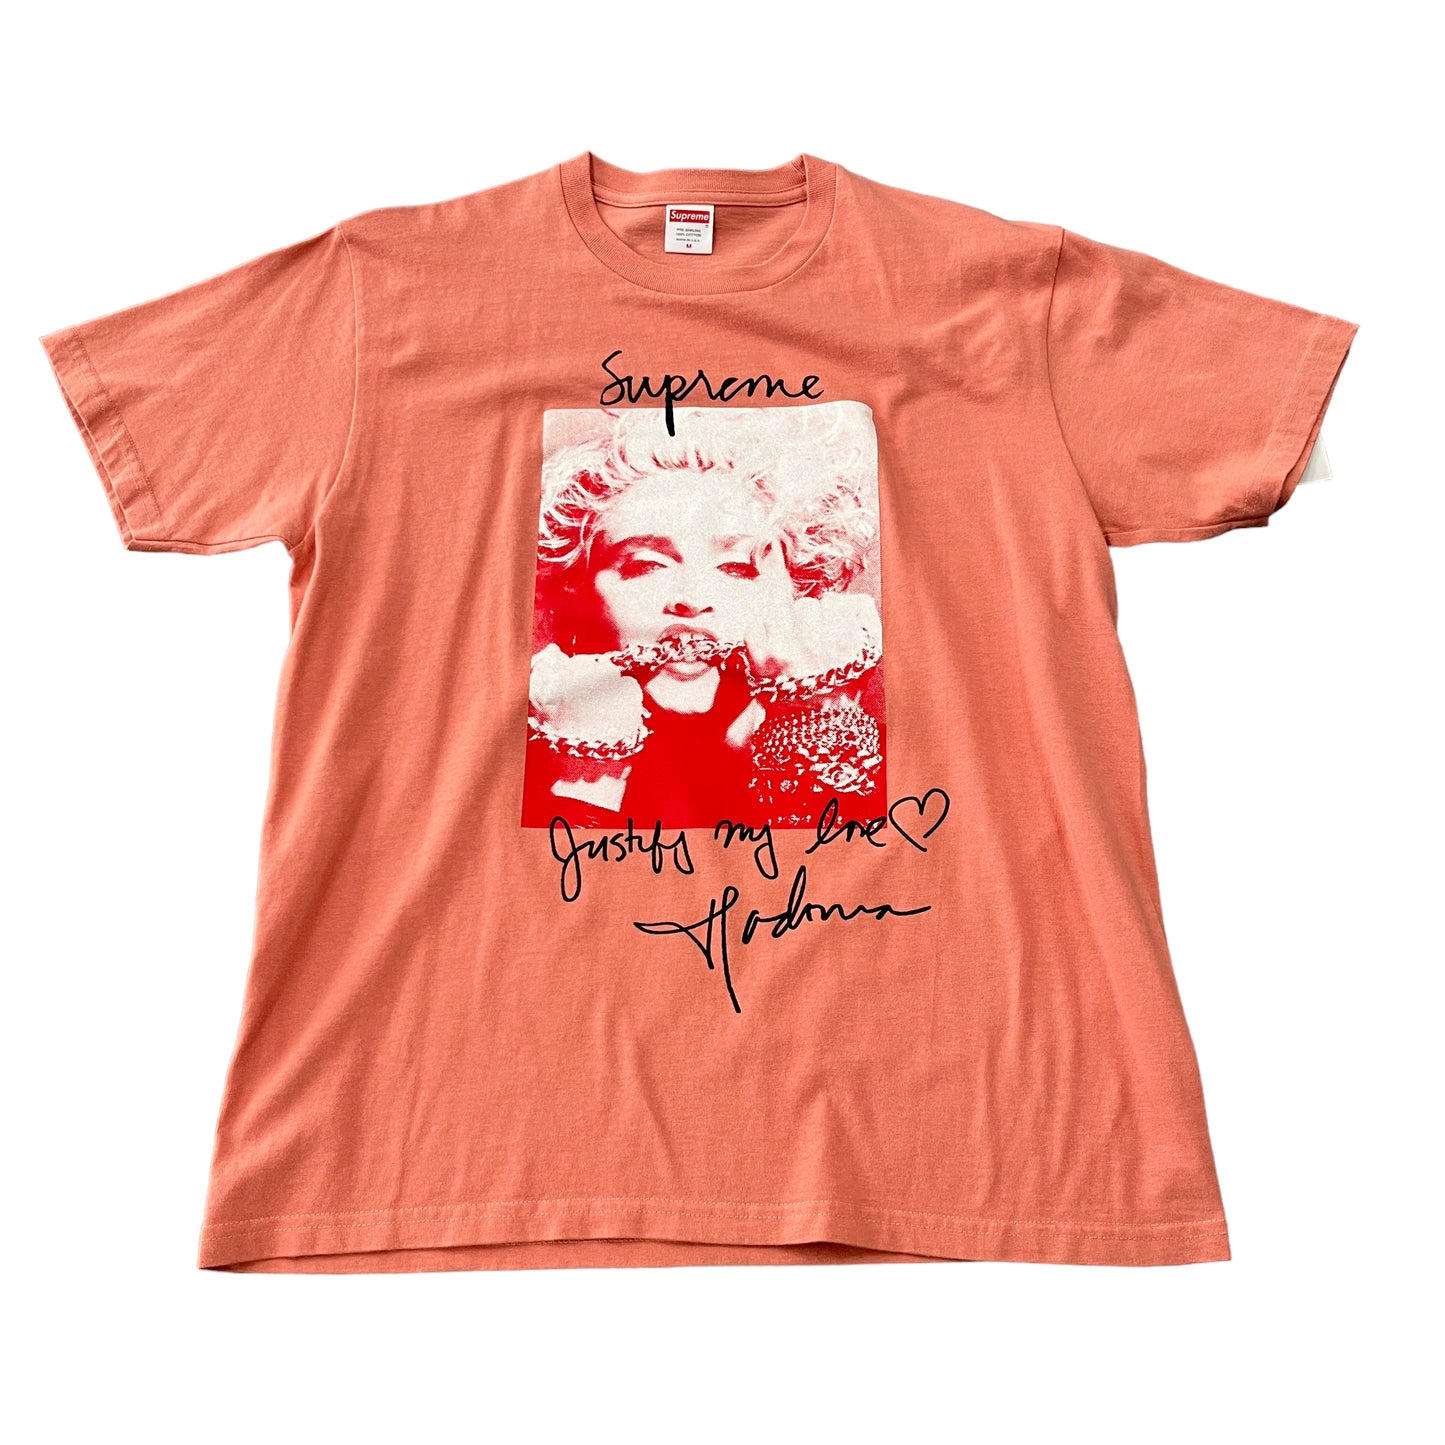 Supreme Madonna Peach Shirt